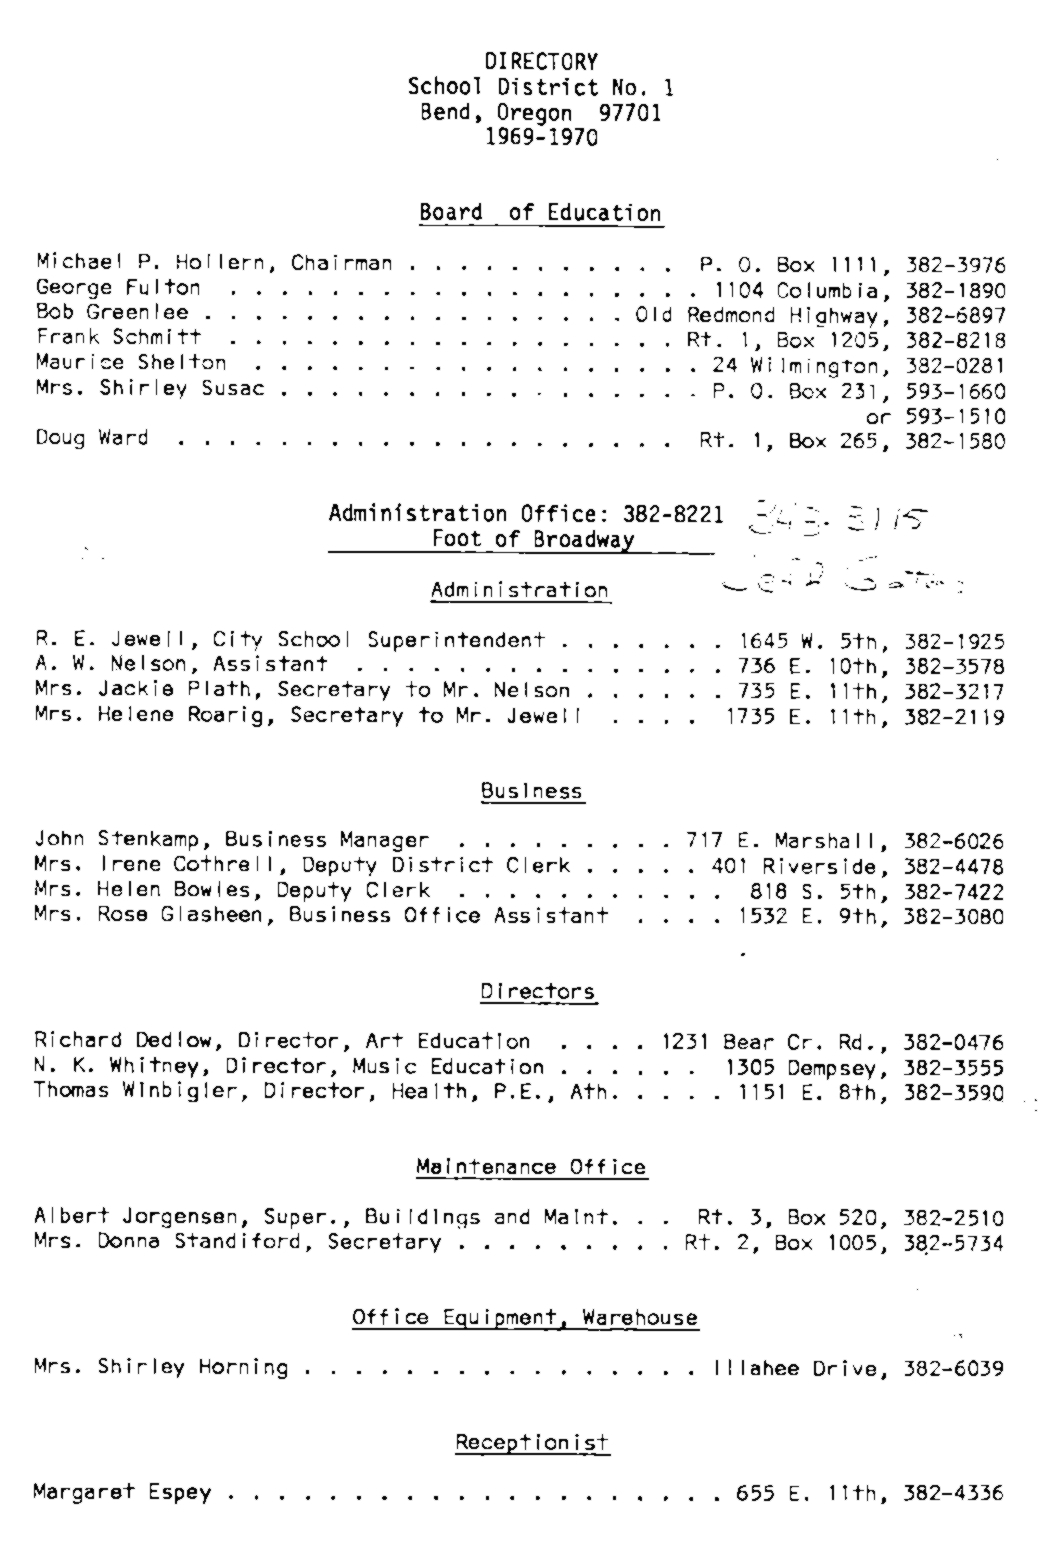 1969 School Directory
(2.6 MB)